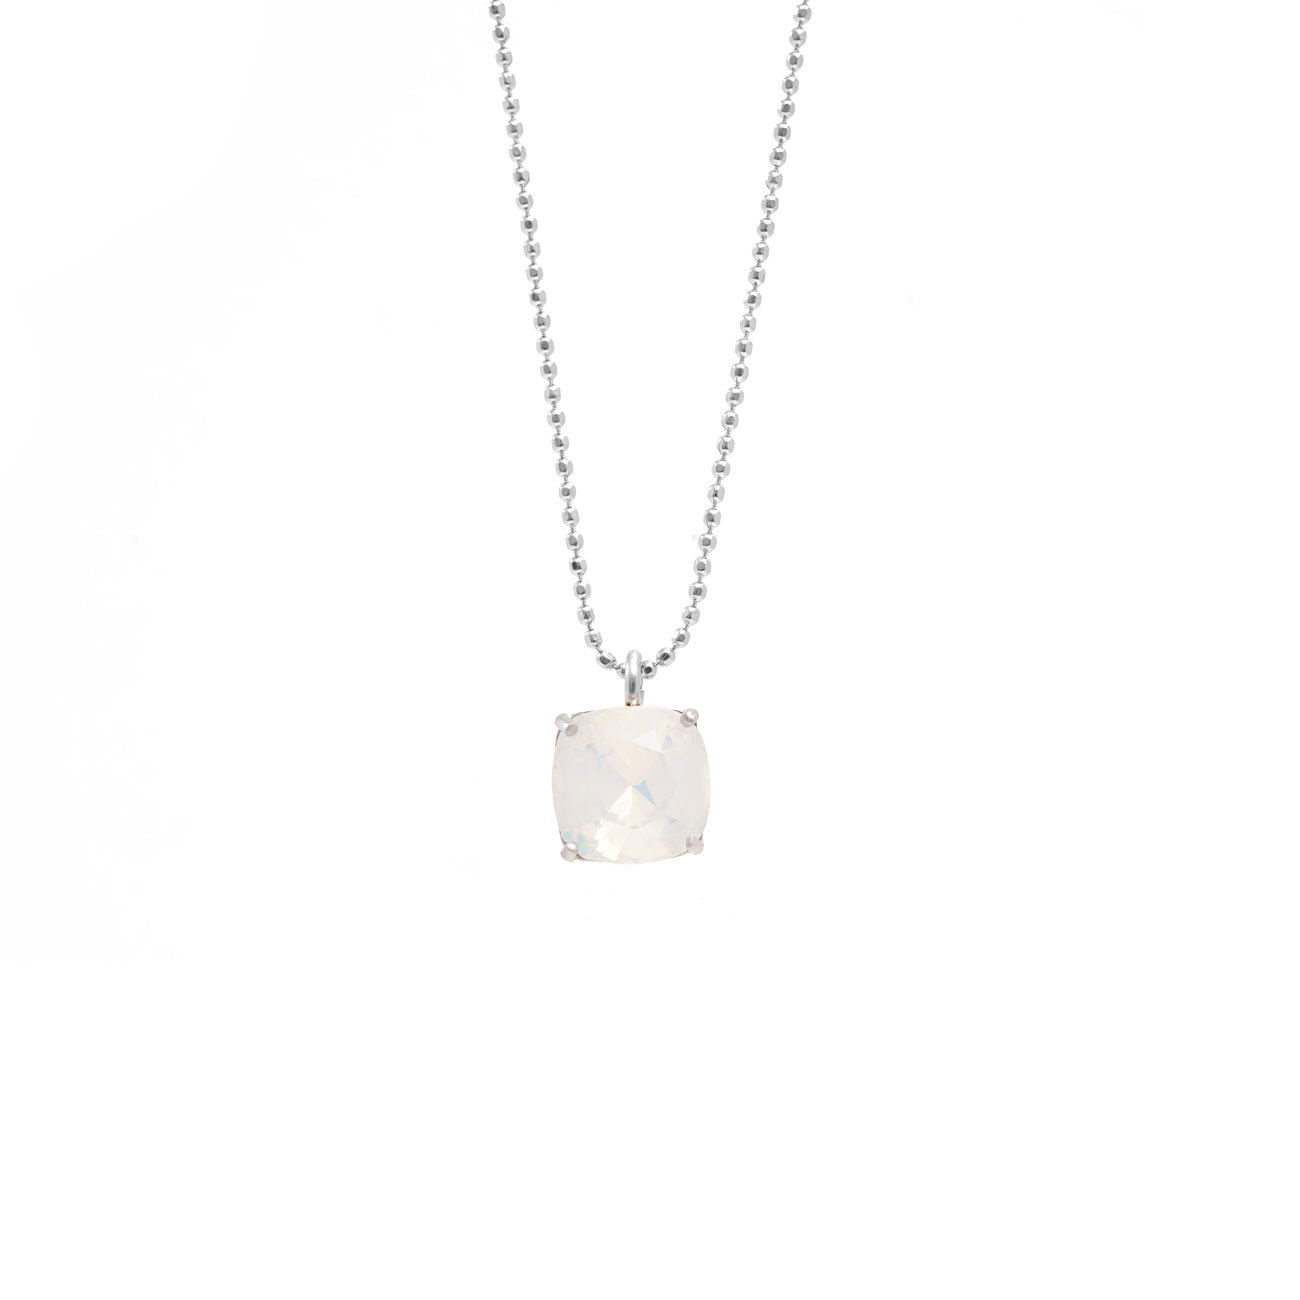 Carla Swarovski necklace - White opal